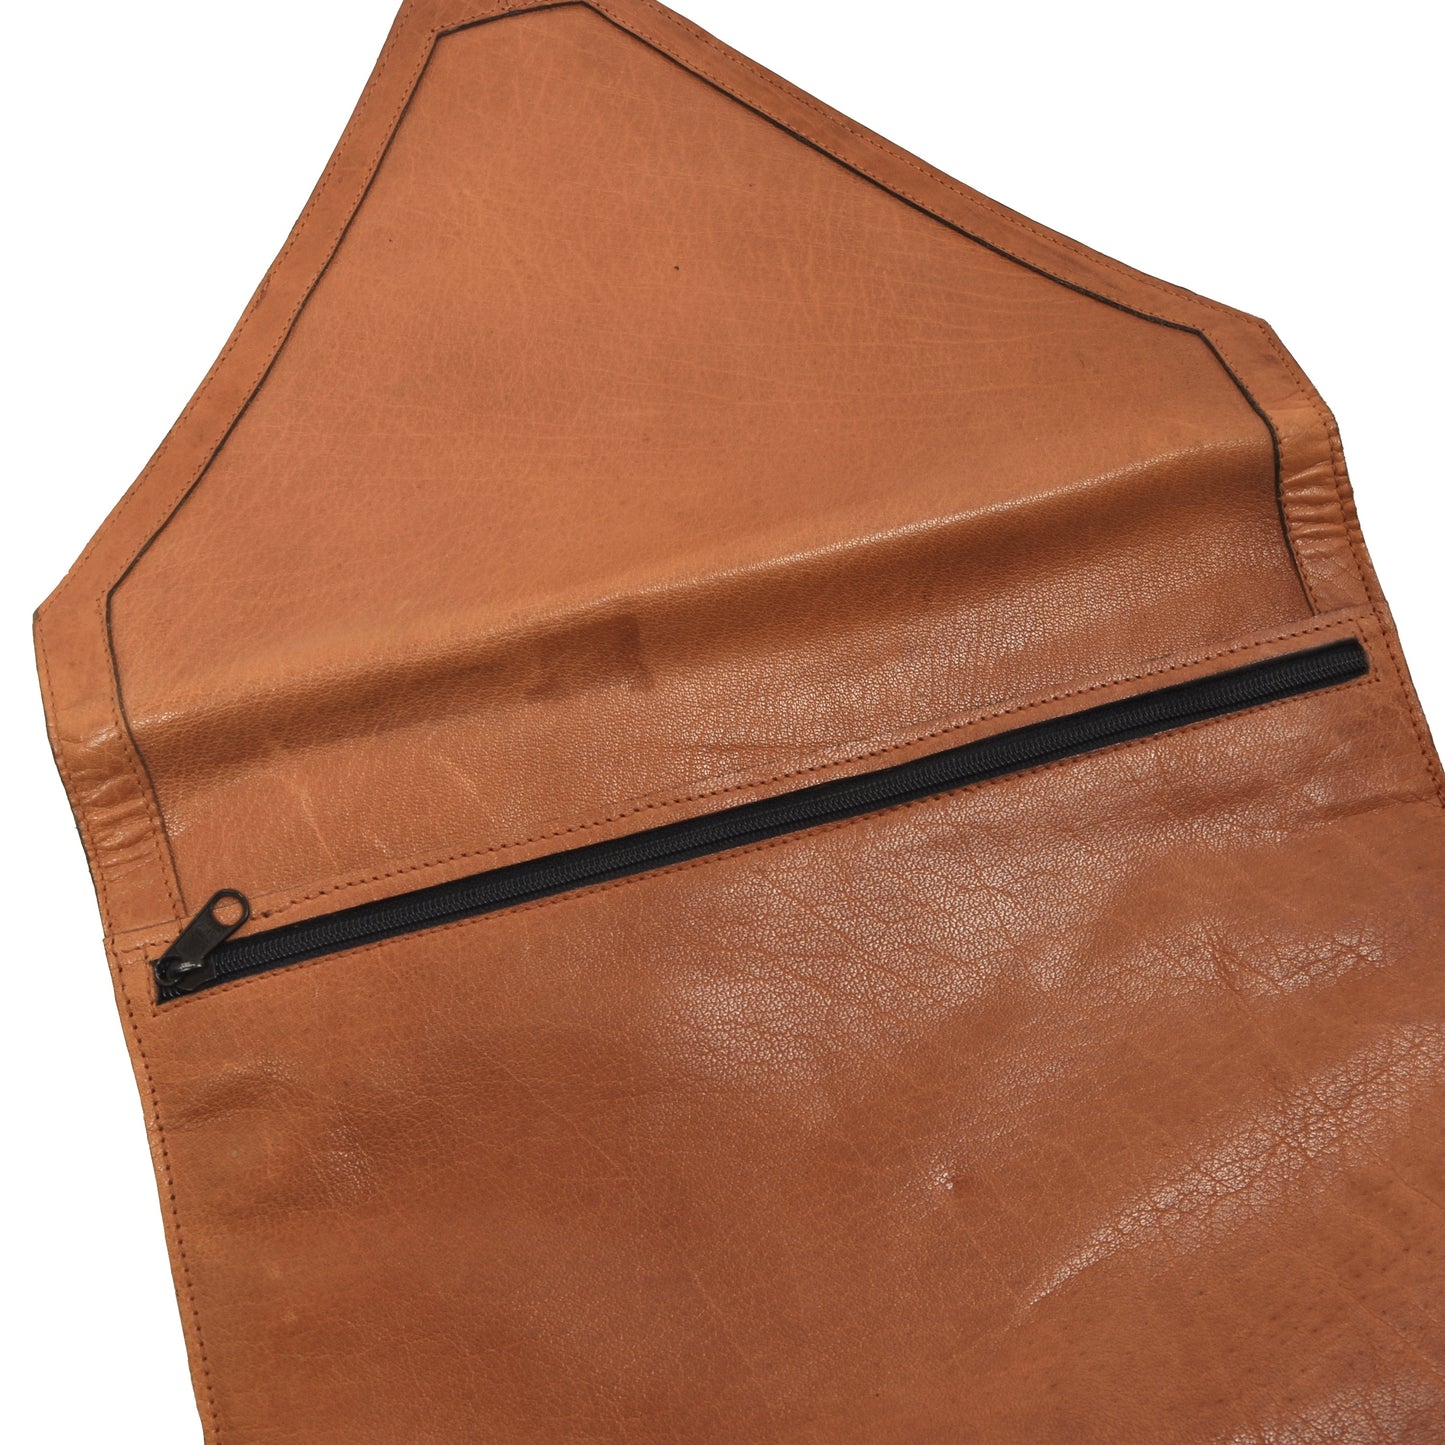 Envelope Style Leather Document Holder/Portfolio - Brown